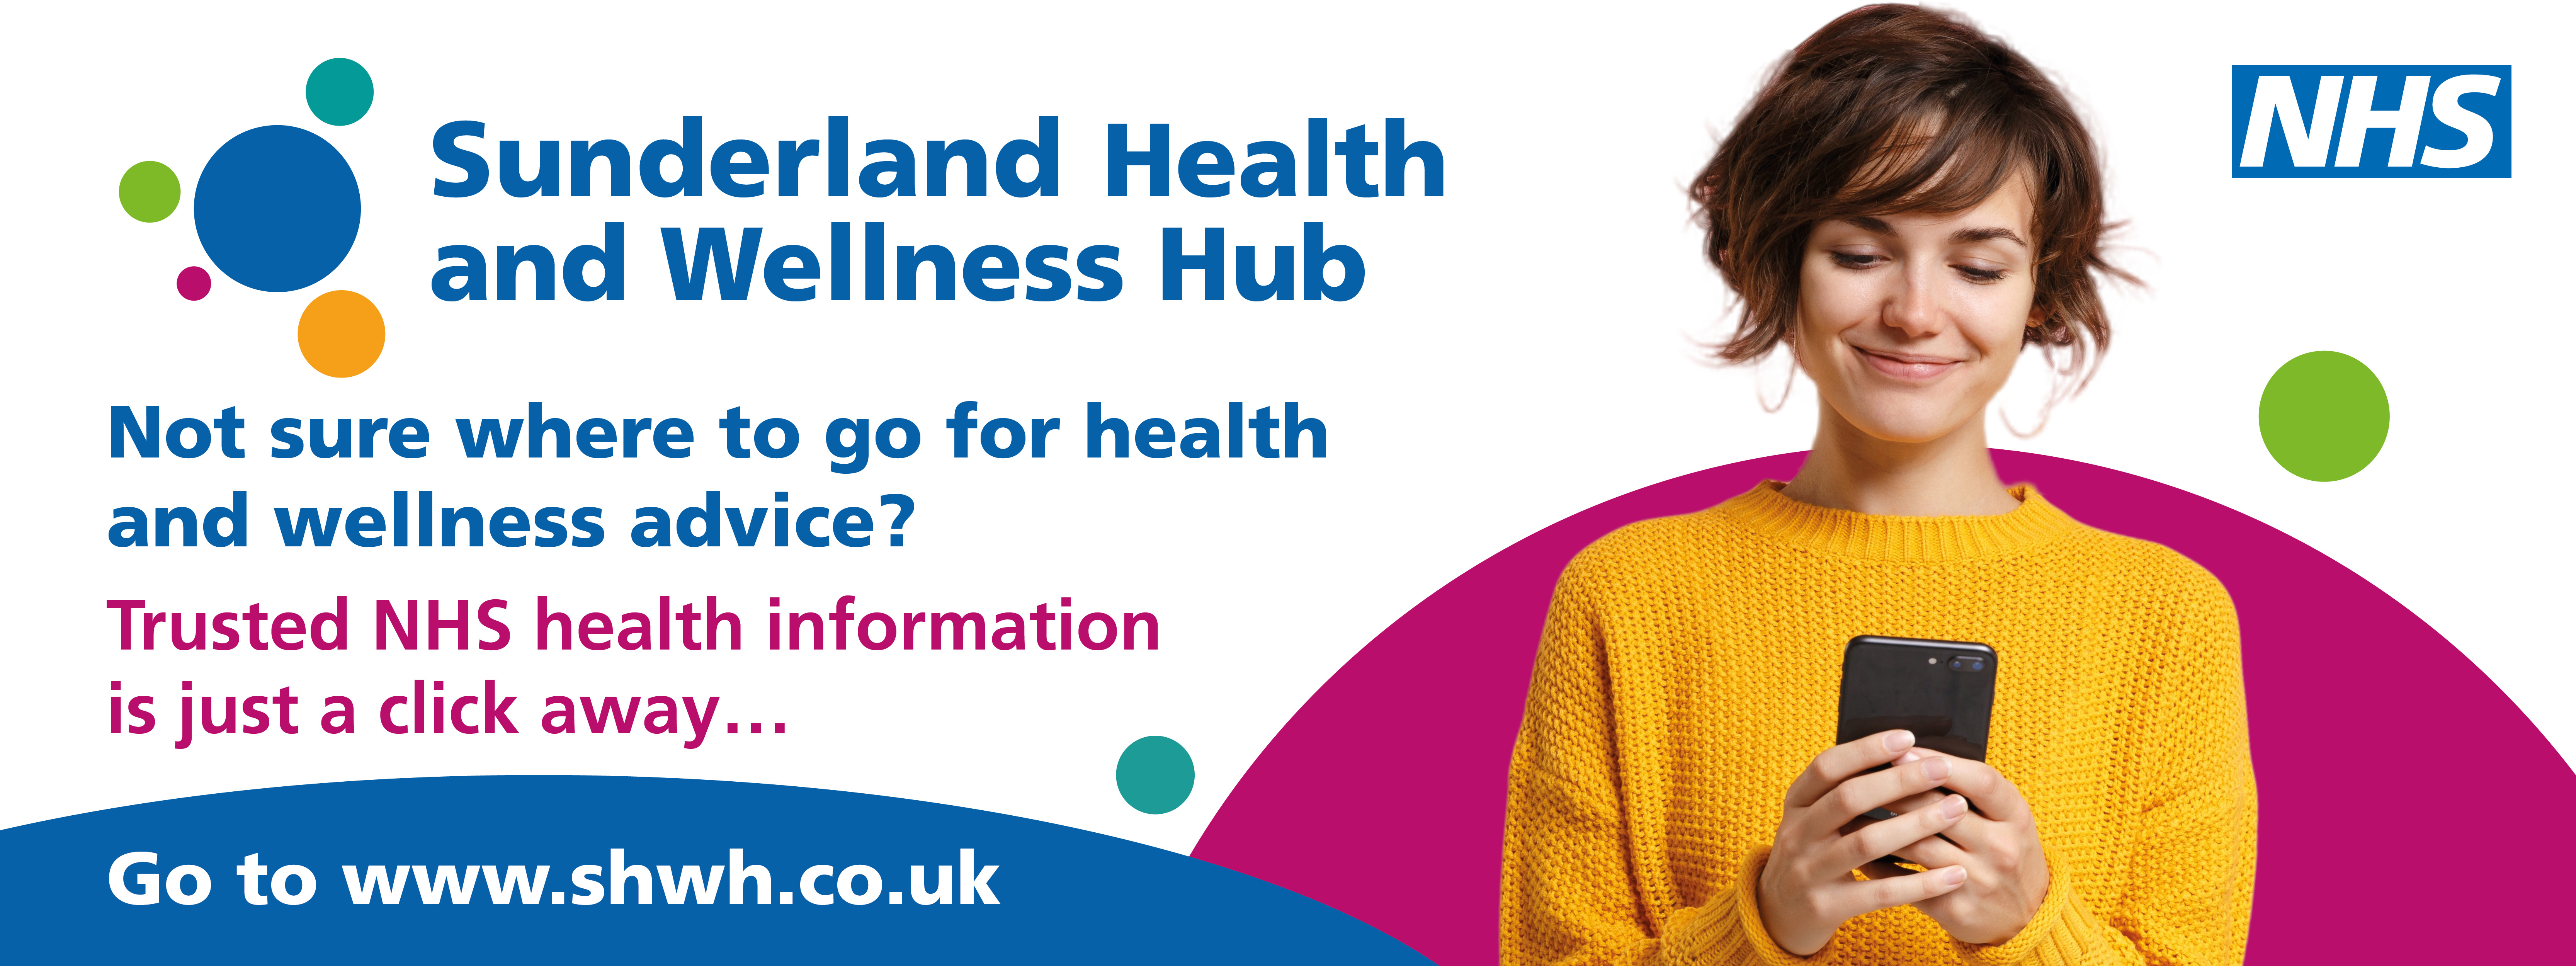 Sunderland Health and Wellbeing Hub Web Banner.jpg